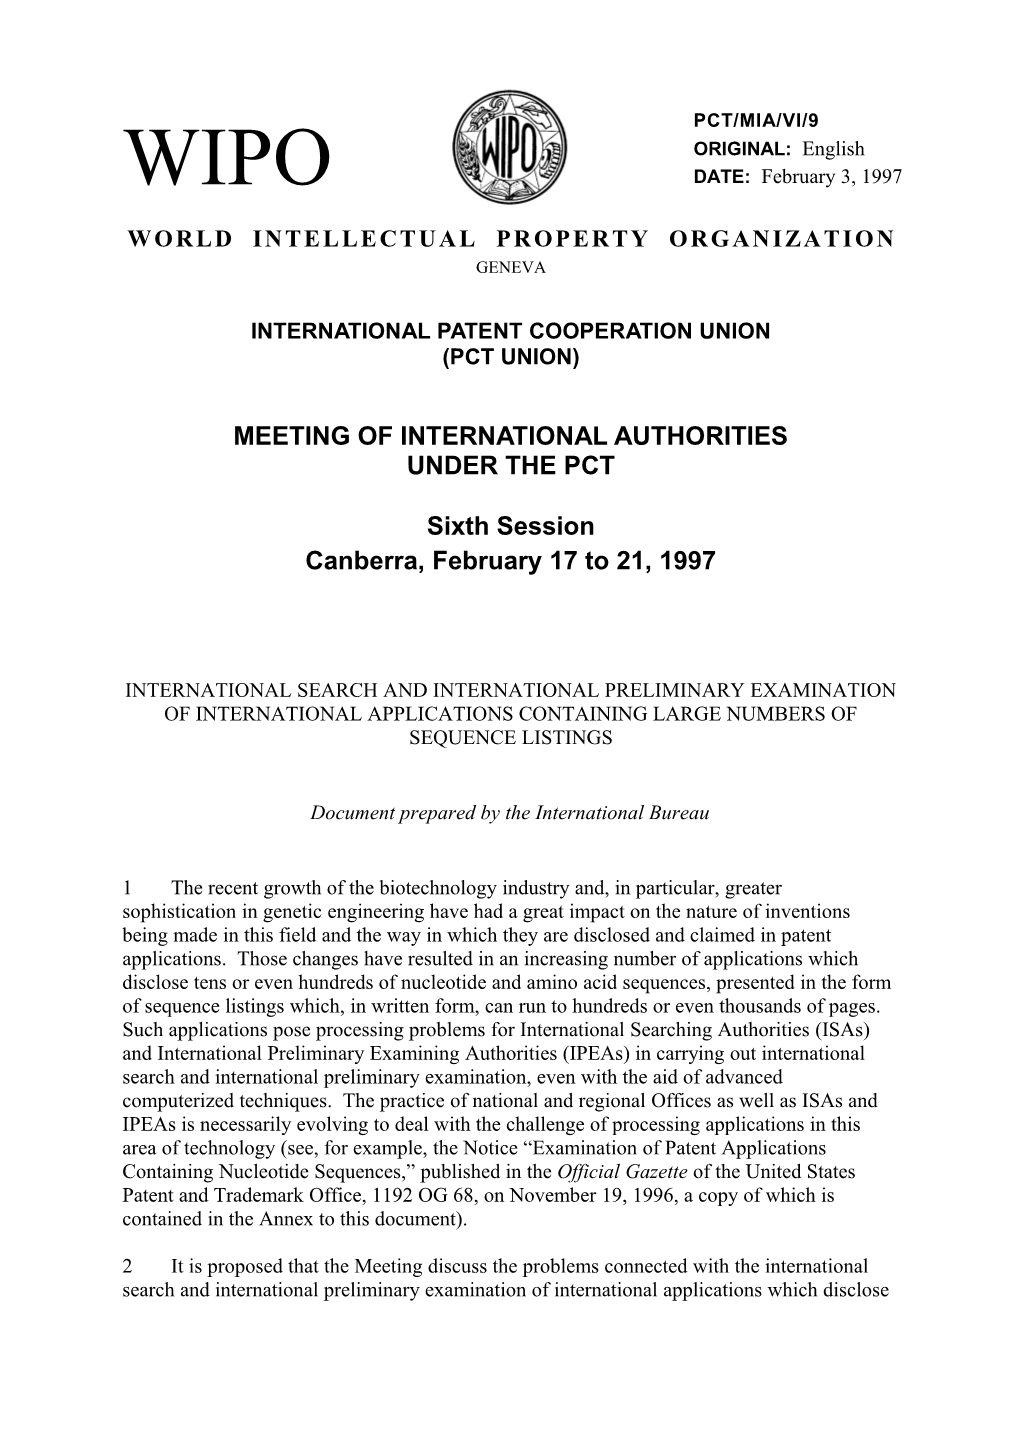 PCT/MIA/VI/9: International Search and International Preliminary Examination of International